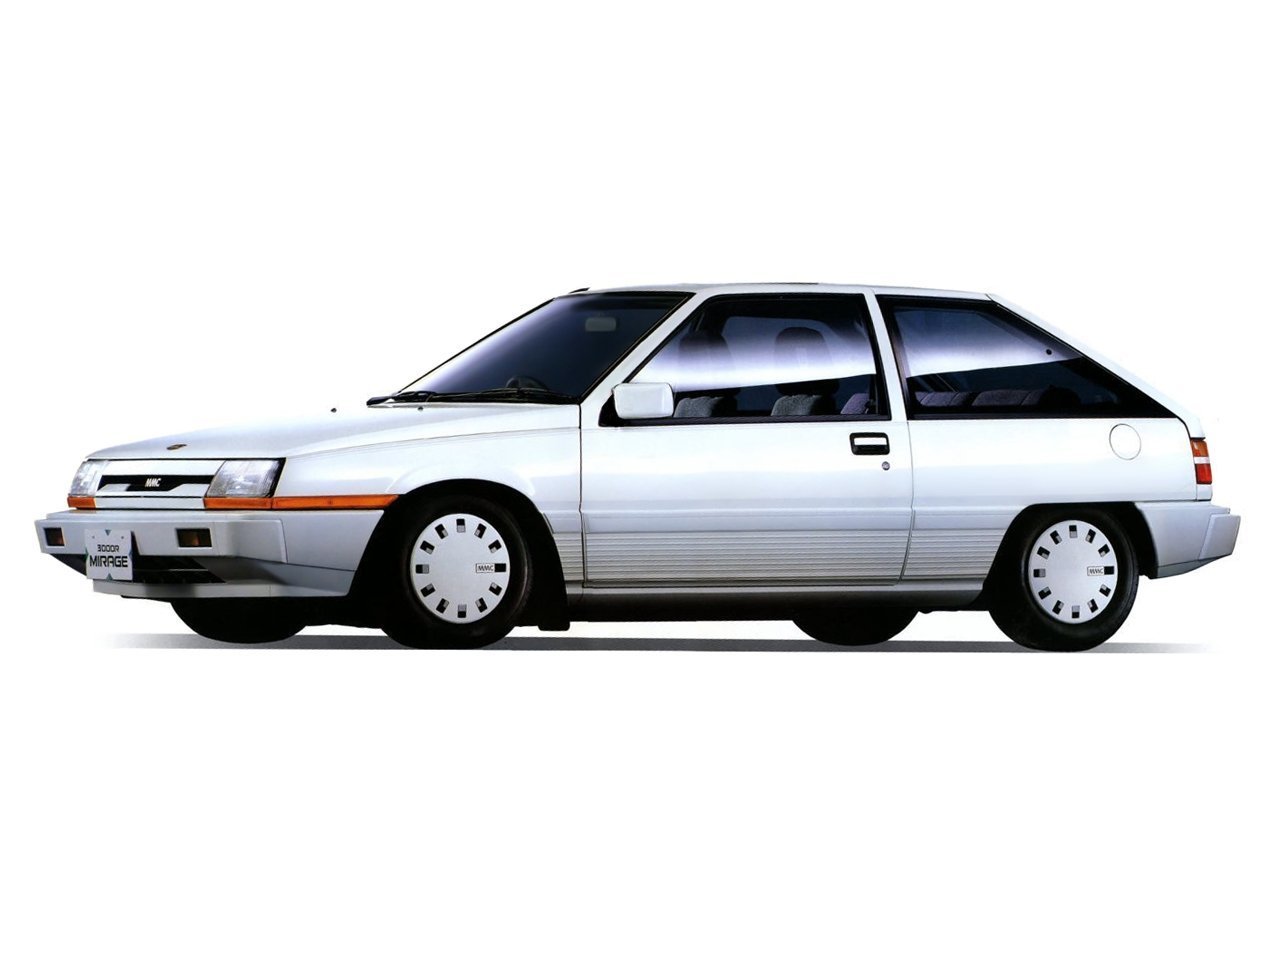 Расход газа трёх комплектаций хэтчбека три двери Mitsubishi Mirage. Разница стоимости заправки газом и бензином. Автономный пробег до и после установки ГБО.